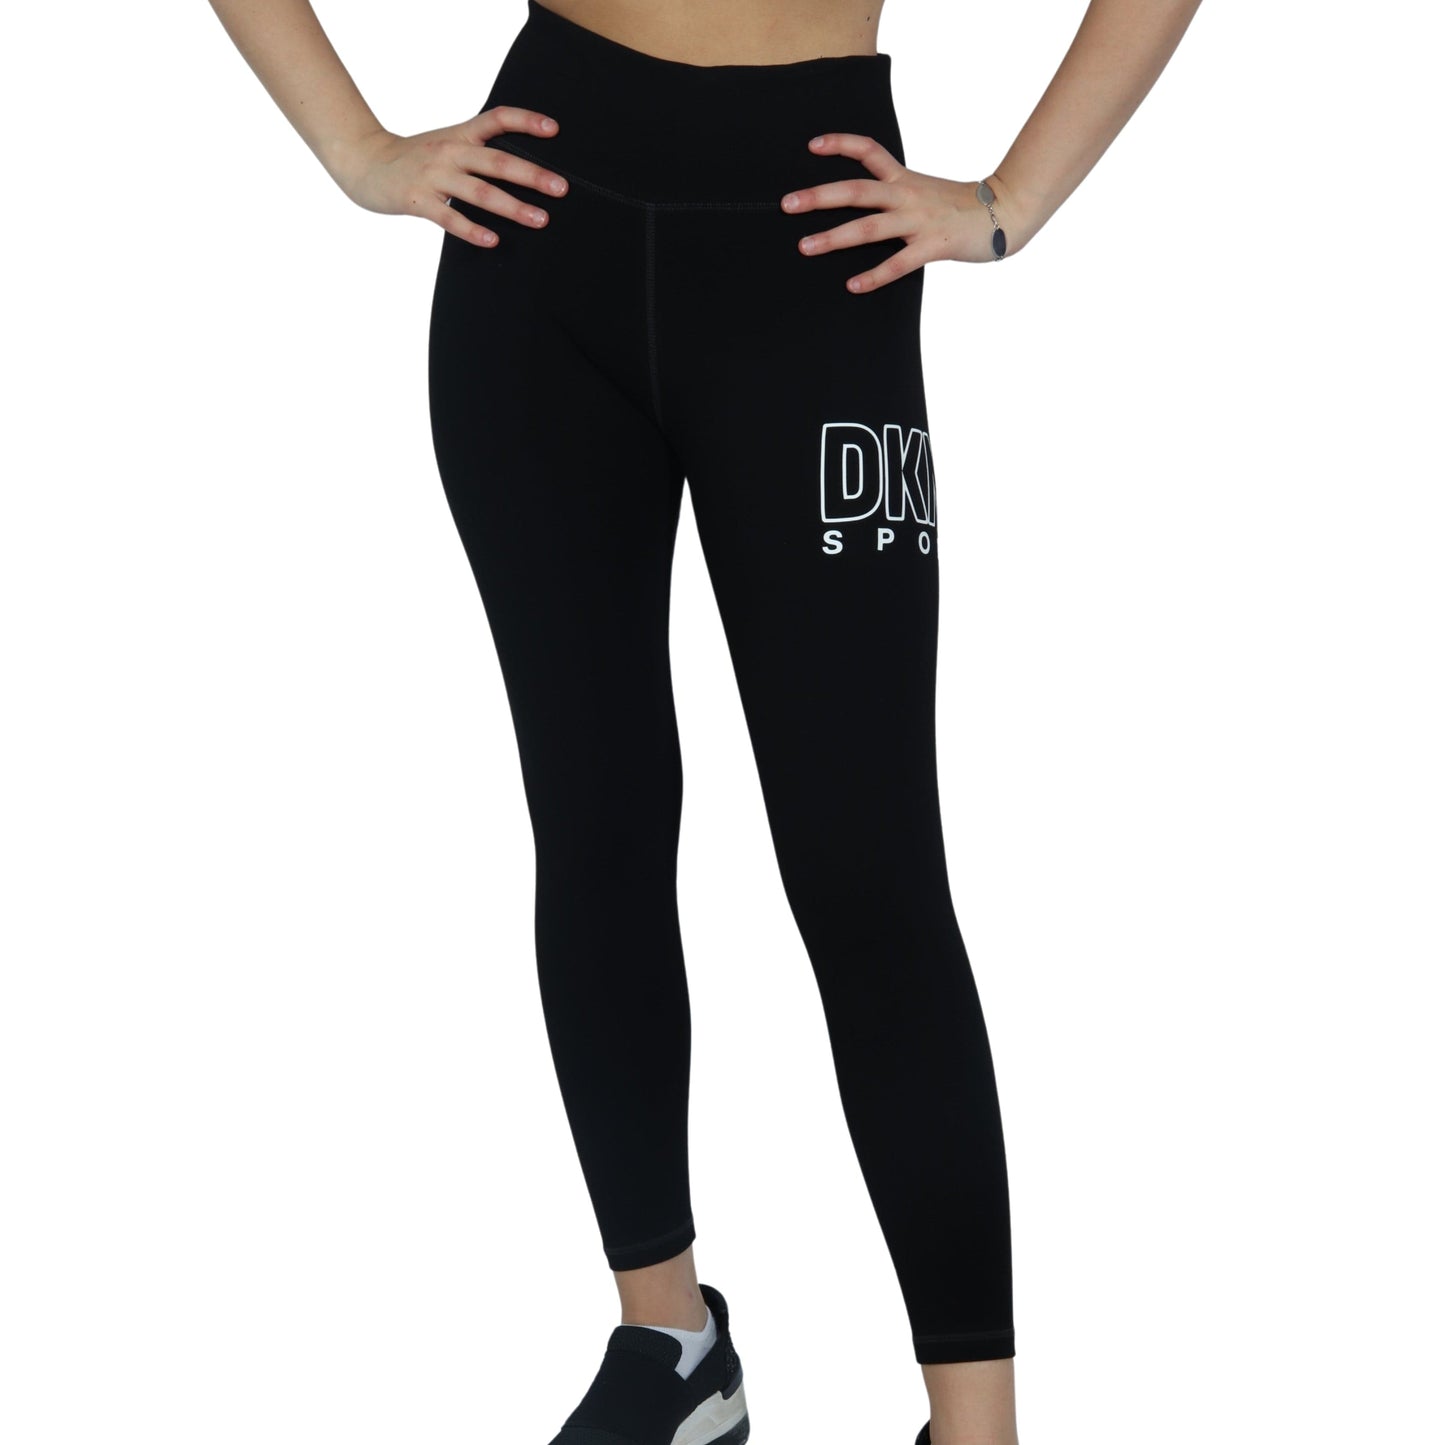 DKNY Womens sports S / Black DKNY - Logo DKNY SPORT Legging